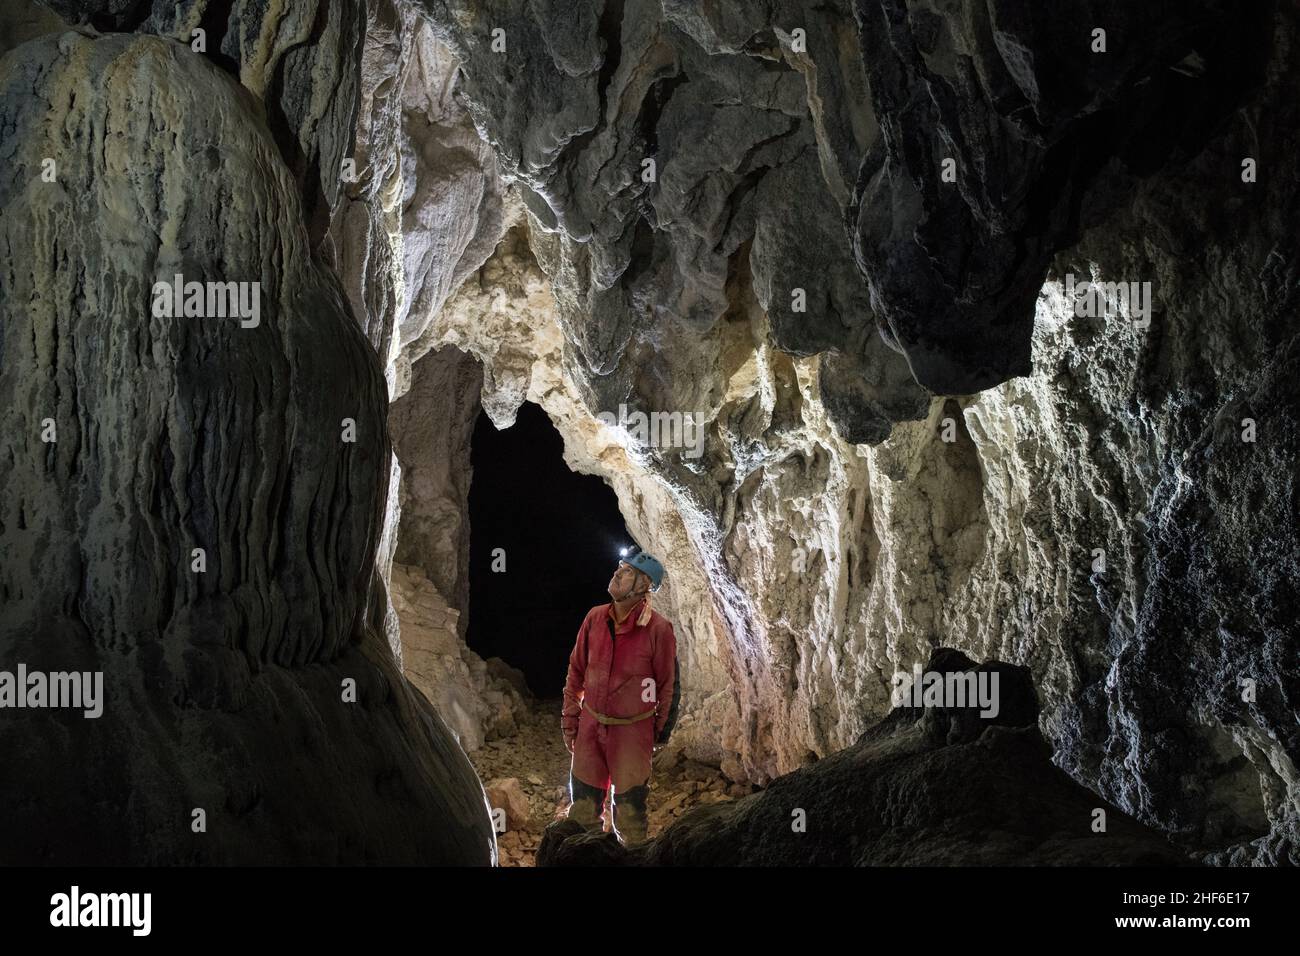 Grotta di stalattiti in Francia, Baume Archee Foto Stock